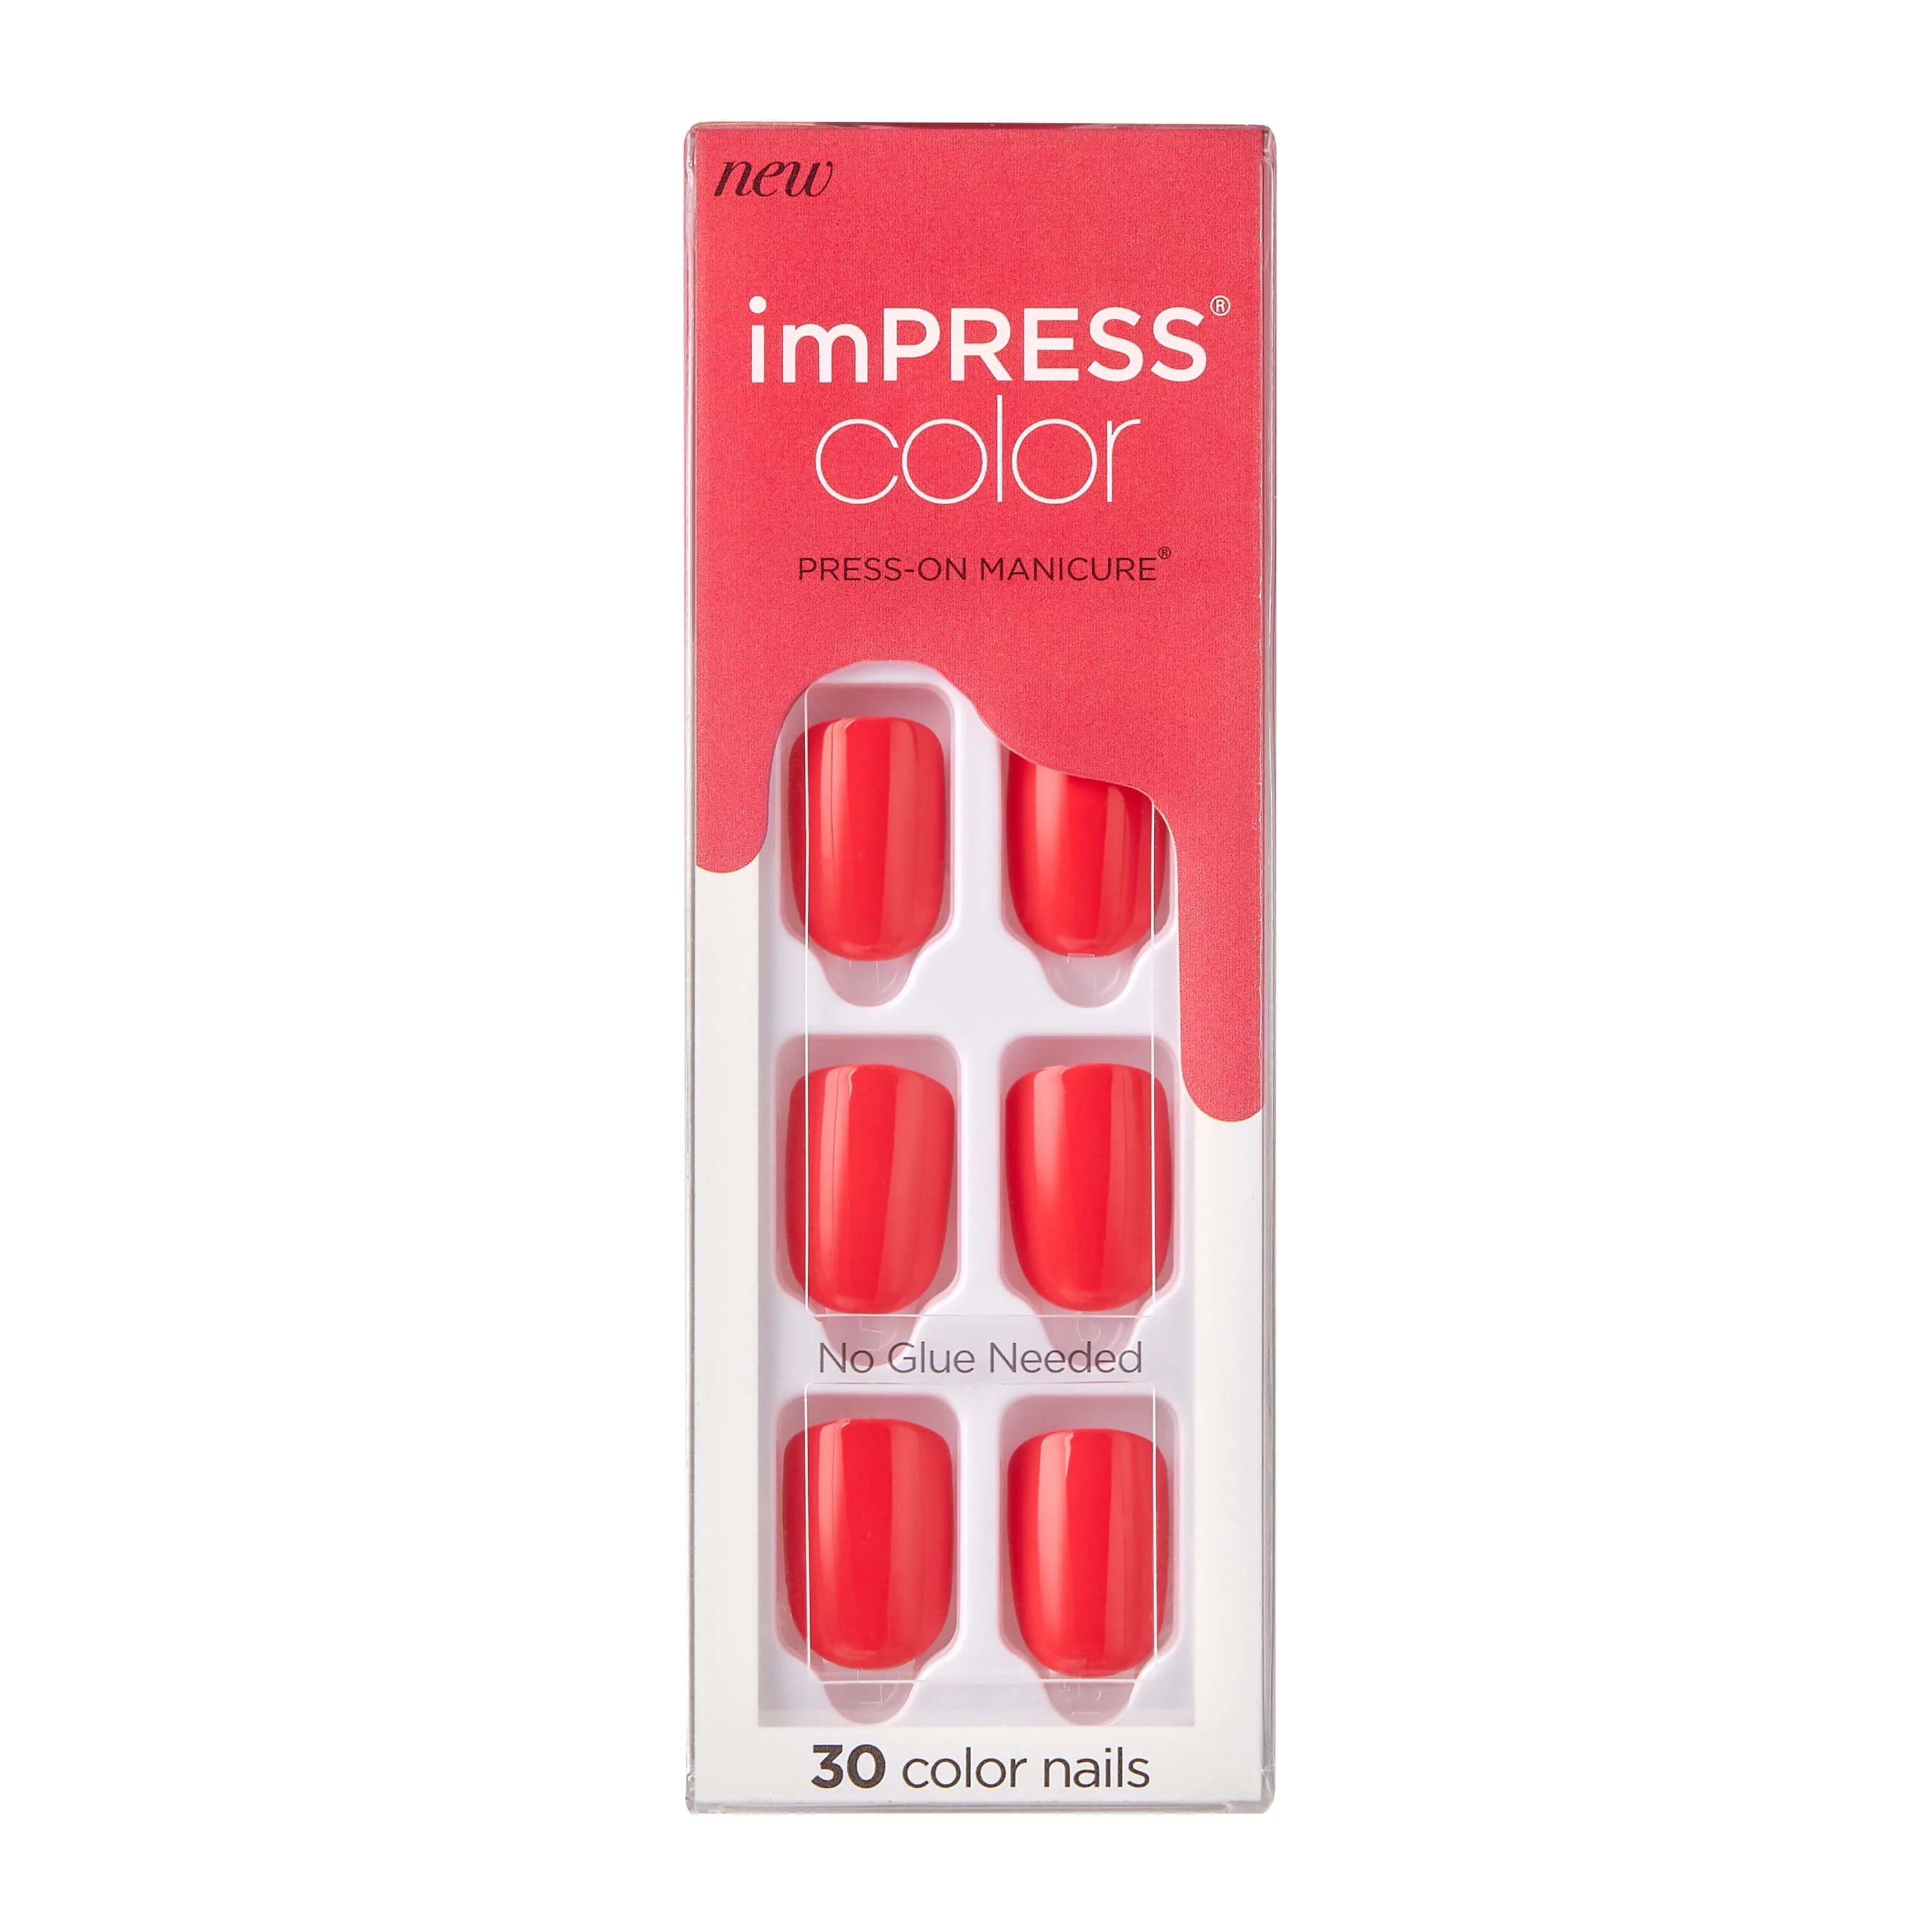 imPRESS Color Press-on Manicure, Chorally Crazy, Short | Walmart (US)